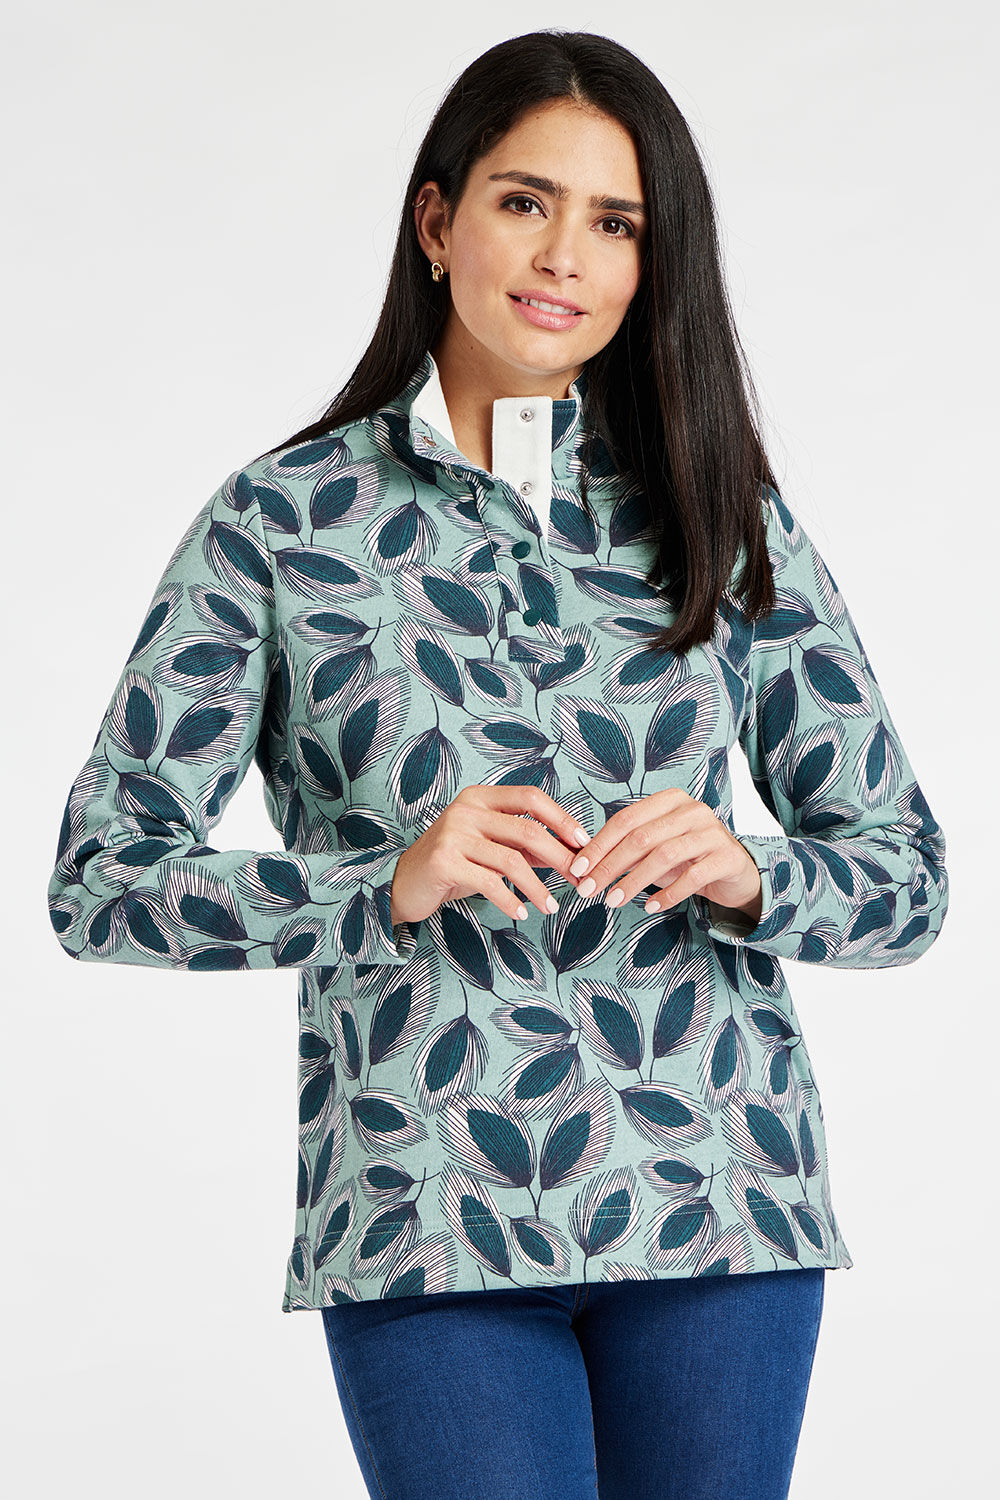 Bonmarche Women’s Green and White Cotton Leaf Print Long Sleeve Funnel Neck Sweatshirt, Size: 12